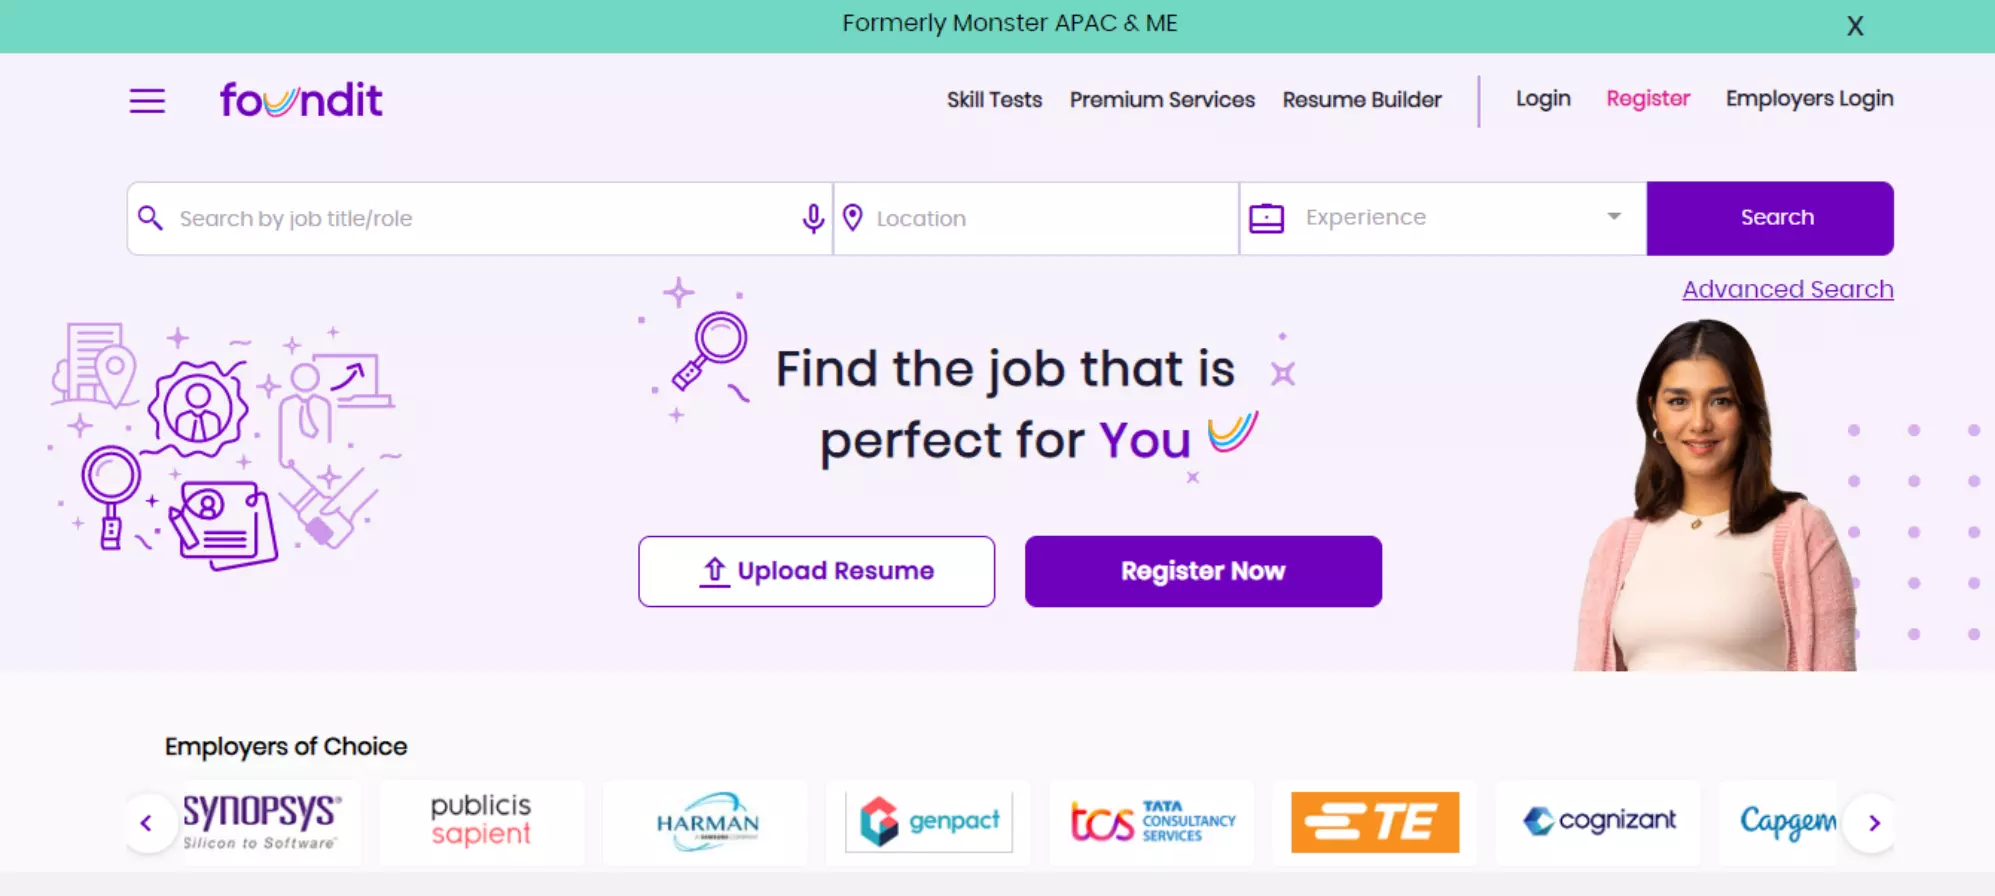 foundIt Job Portal Image